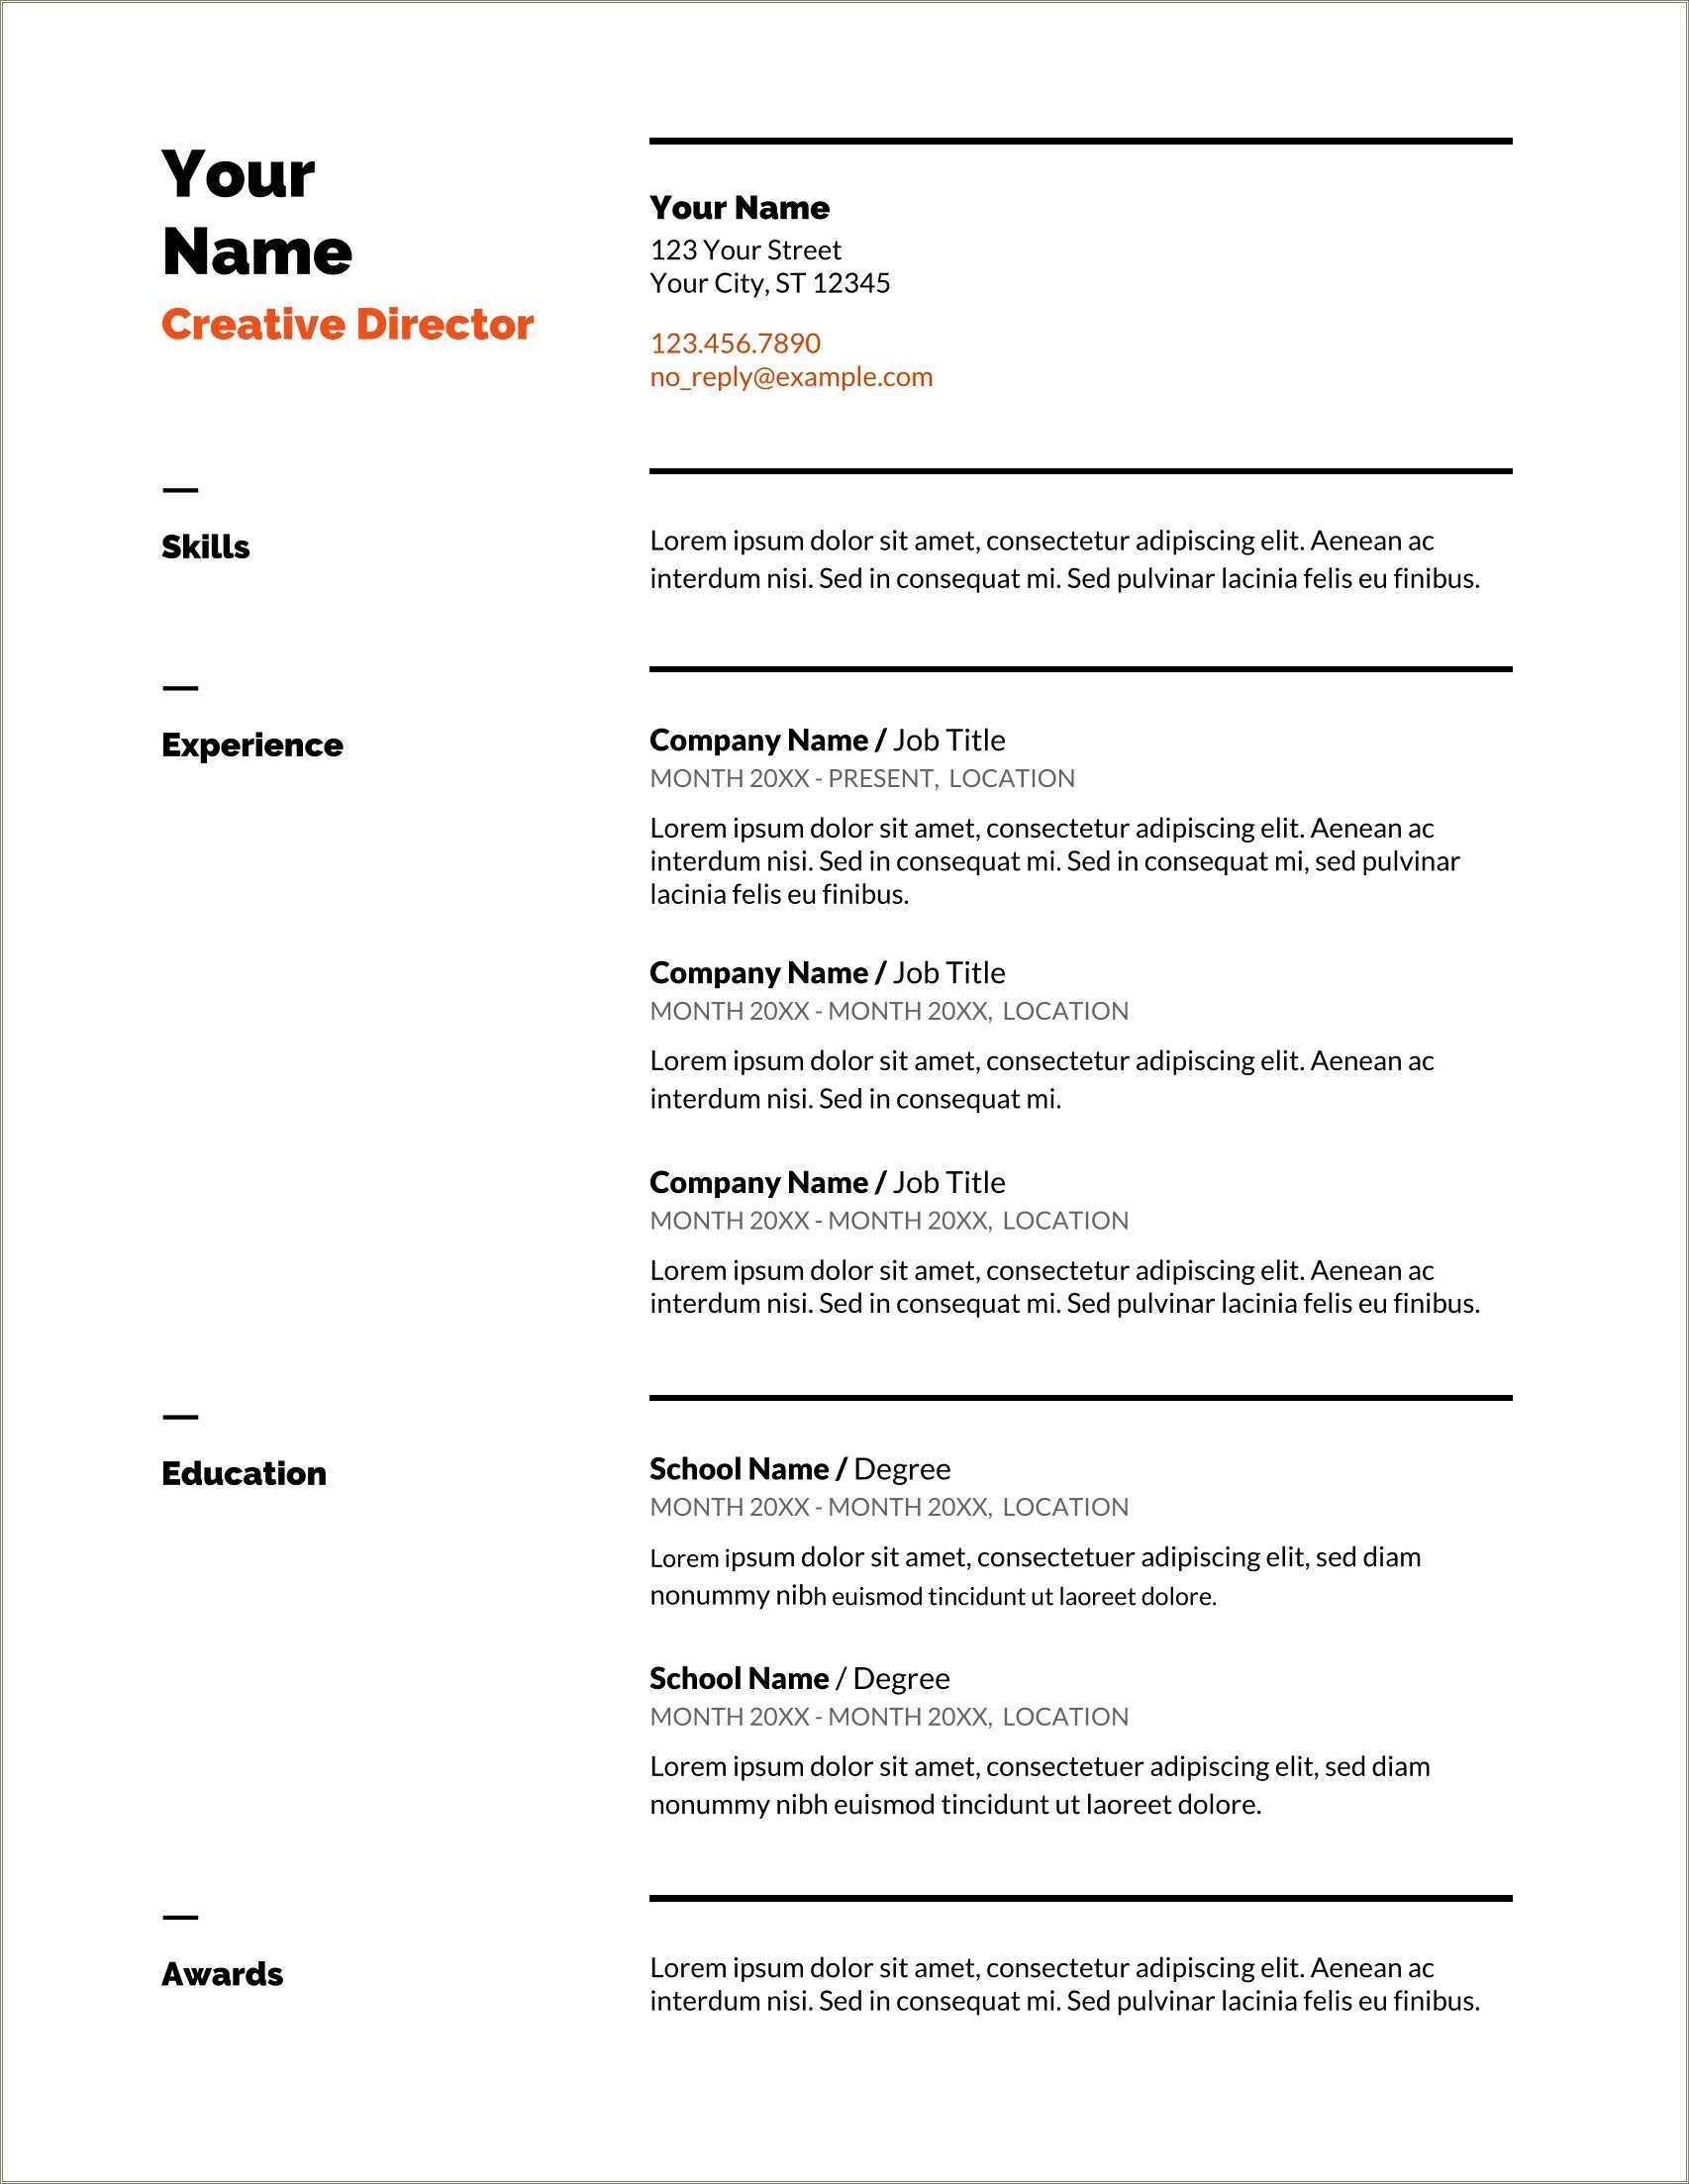 best-resume-font-google-docs-resume-example-gallery